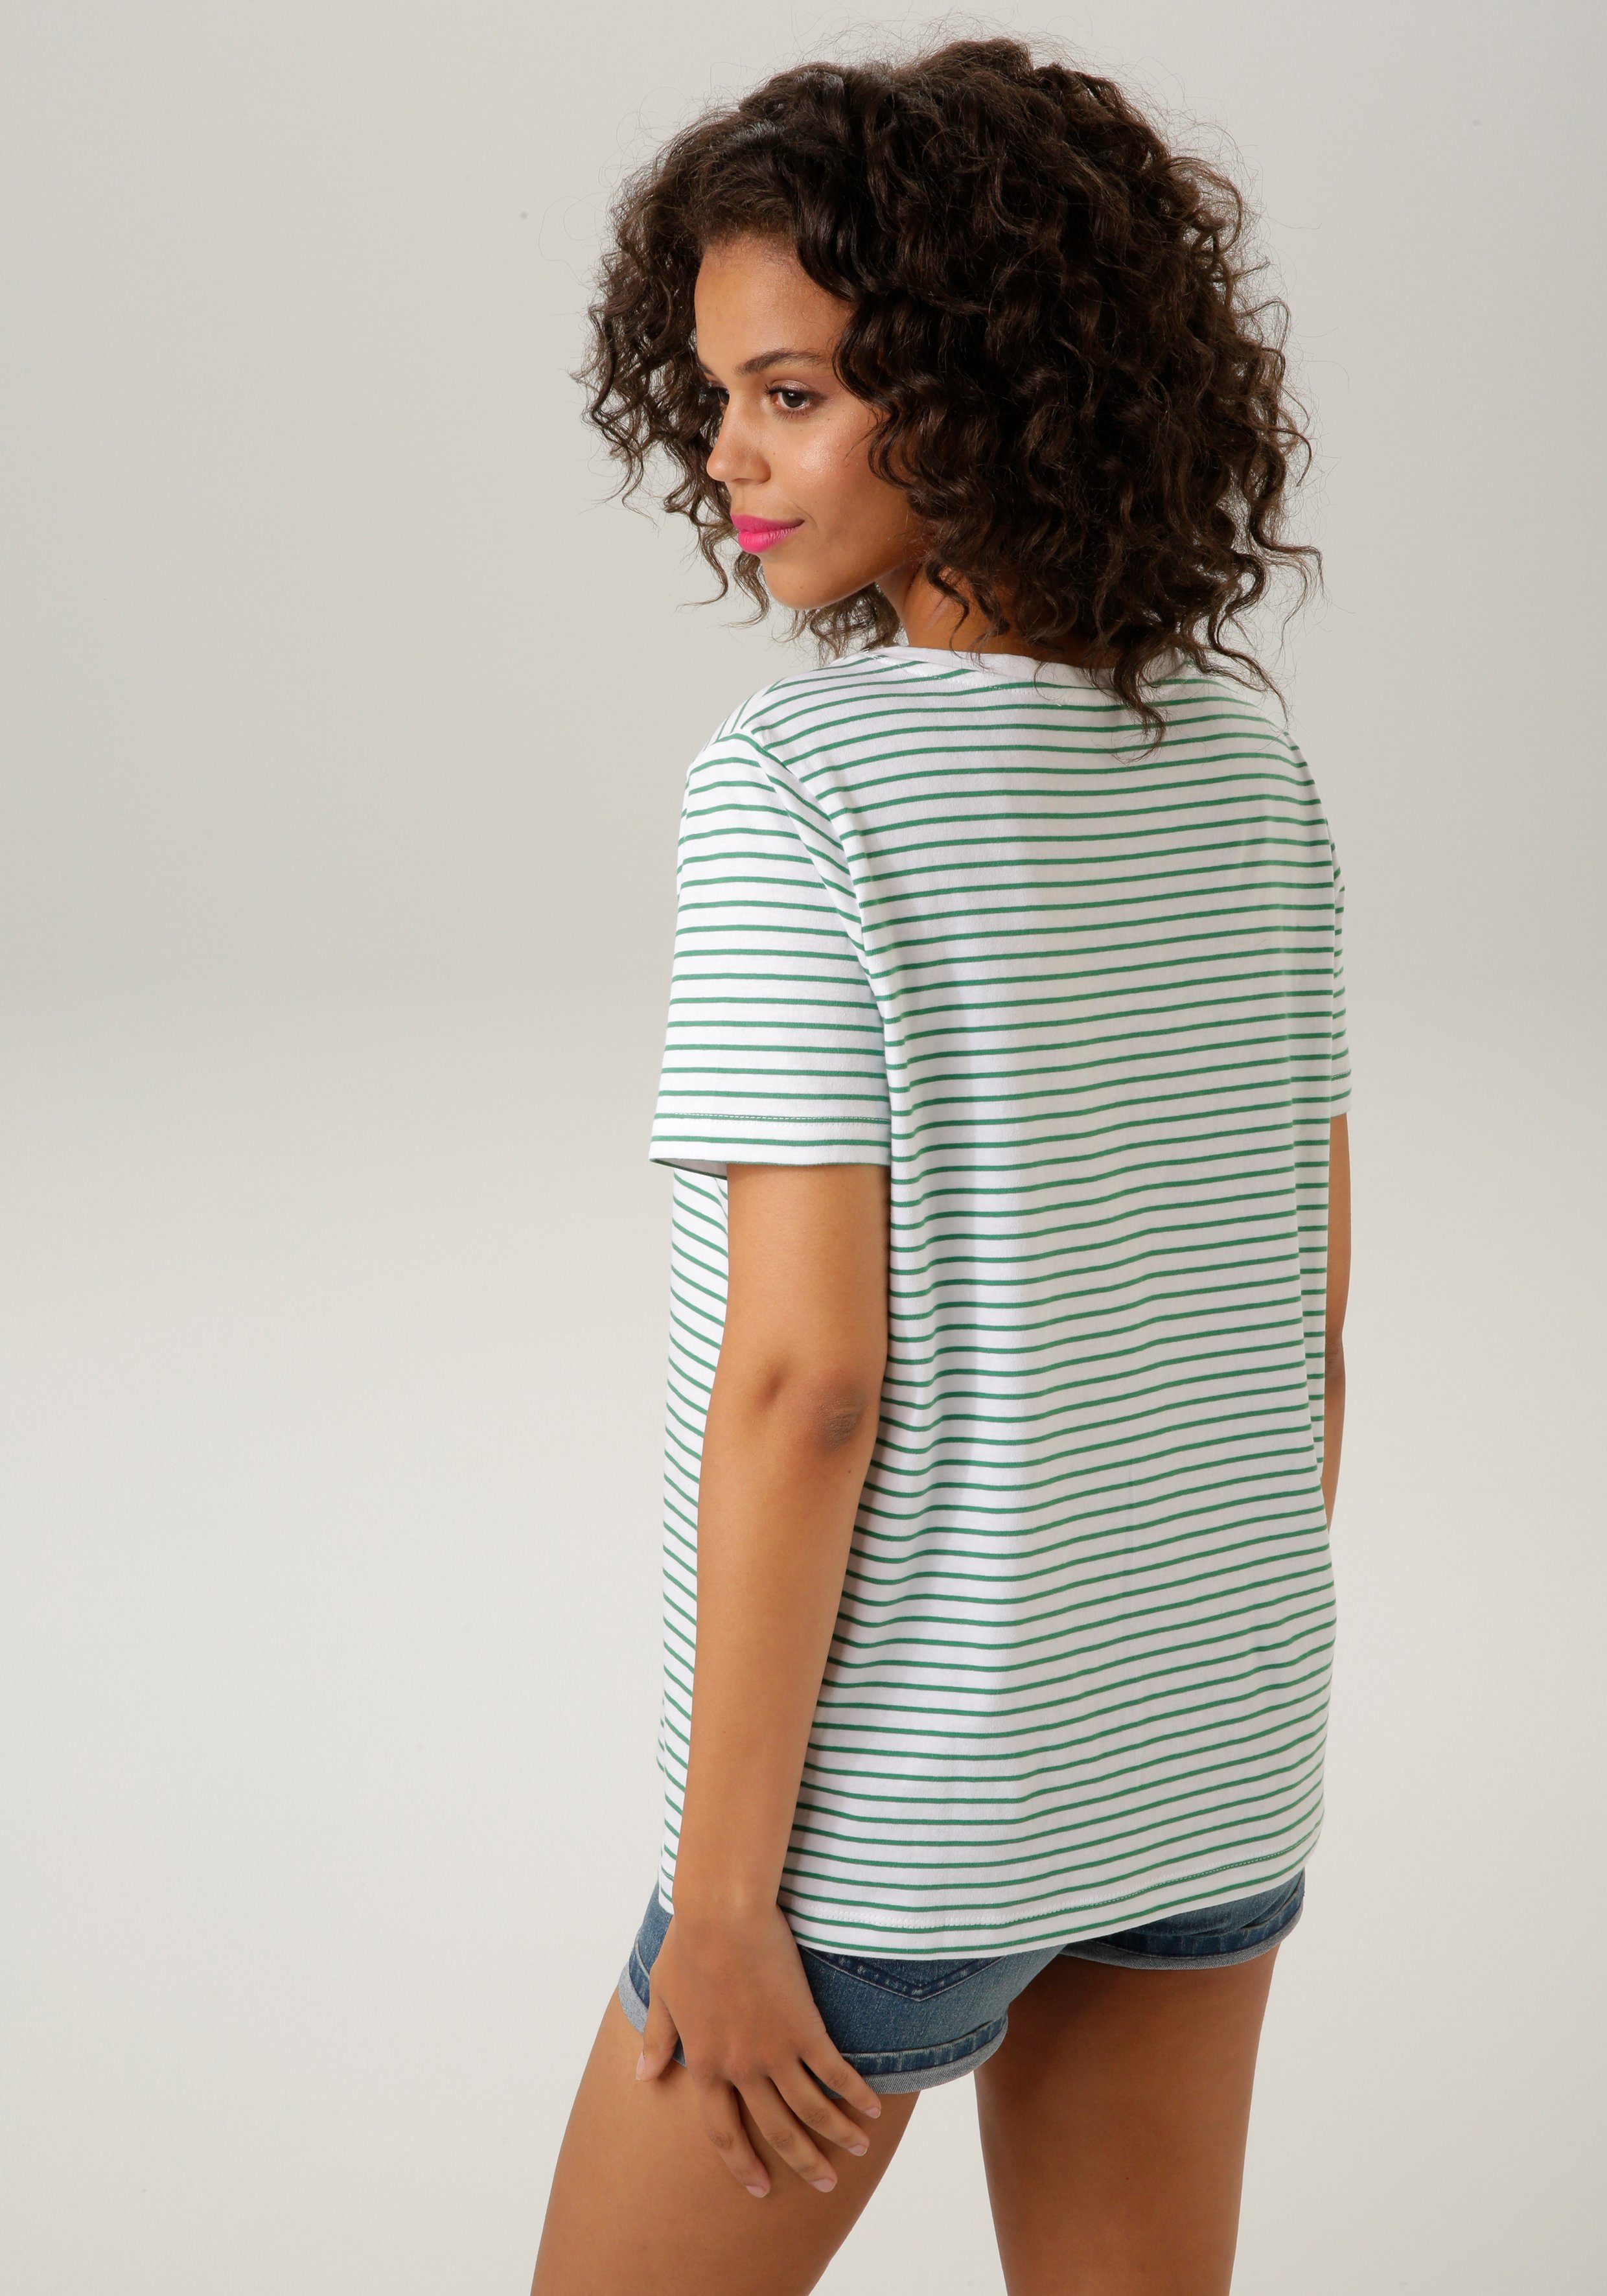 Aniston CASUAL T-shirt met streepdessin nieuwe collectie